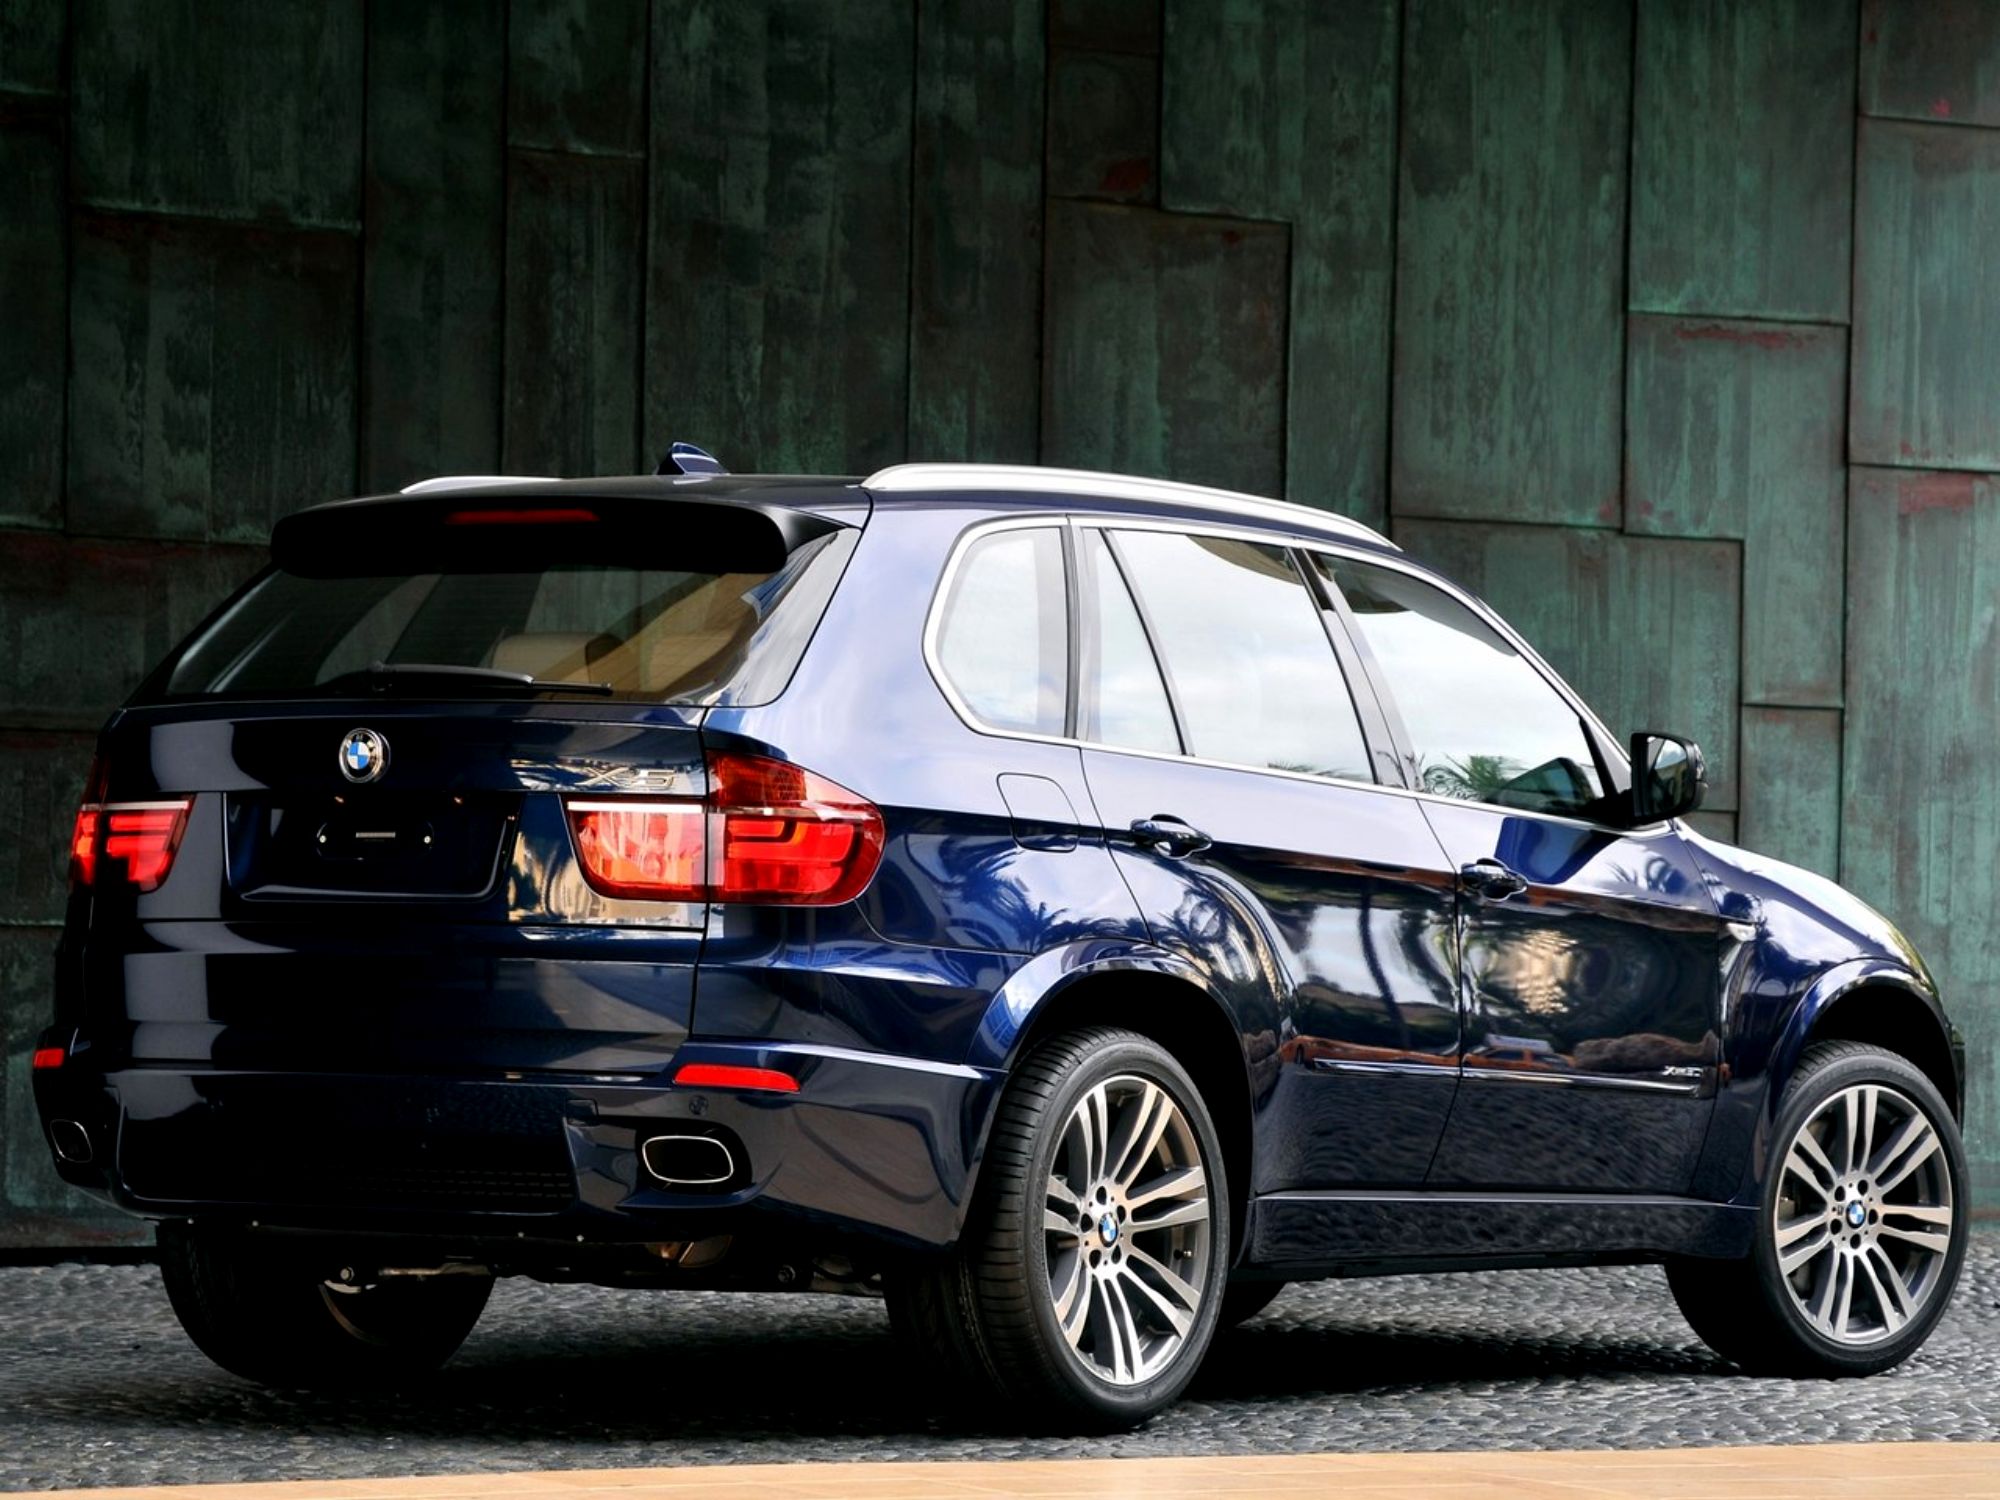 M5i5r xgzafemo5vfjwlyw. BMW x5 e70 2010. BMW x5 e70 5,5. BMW x5 e70 m пакет. BMW x5 XDRIVE.